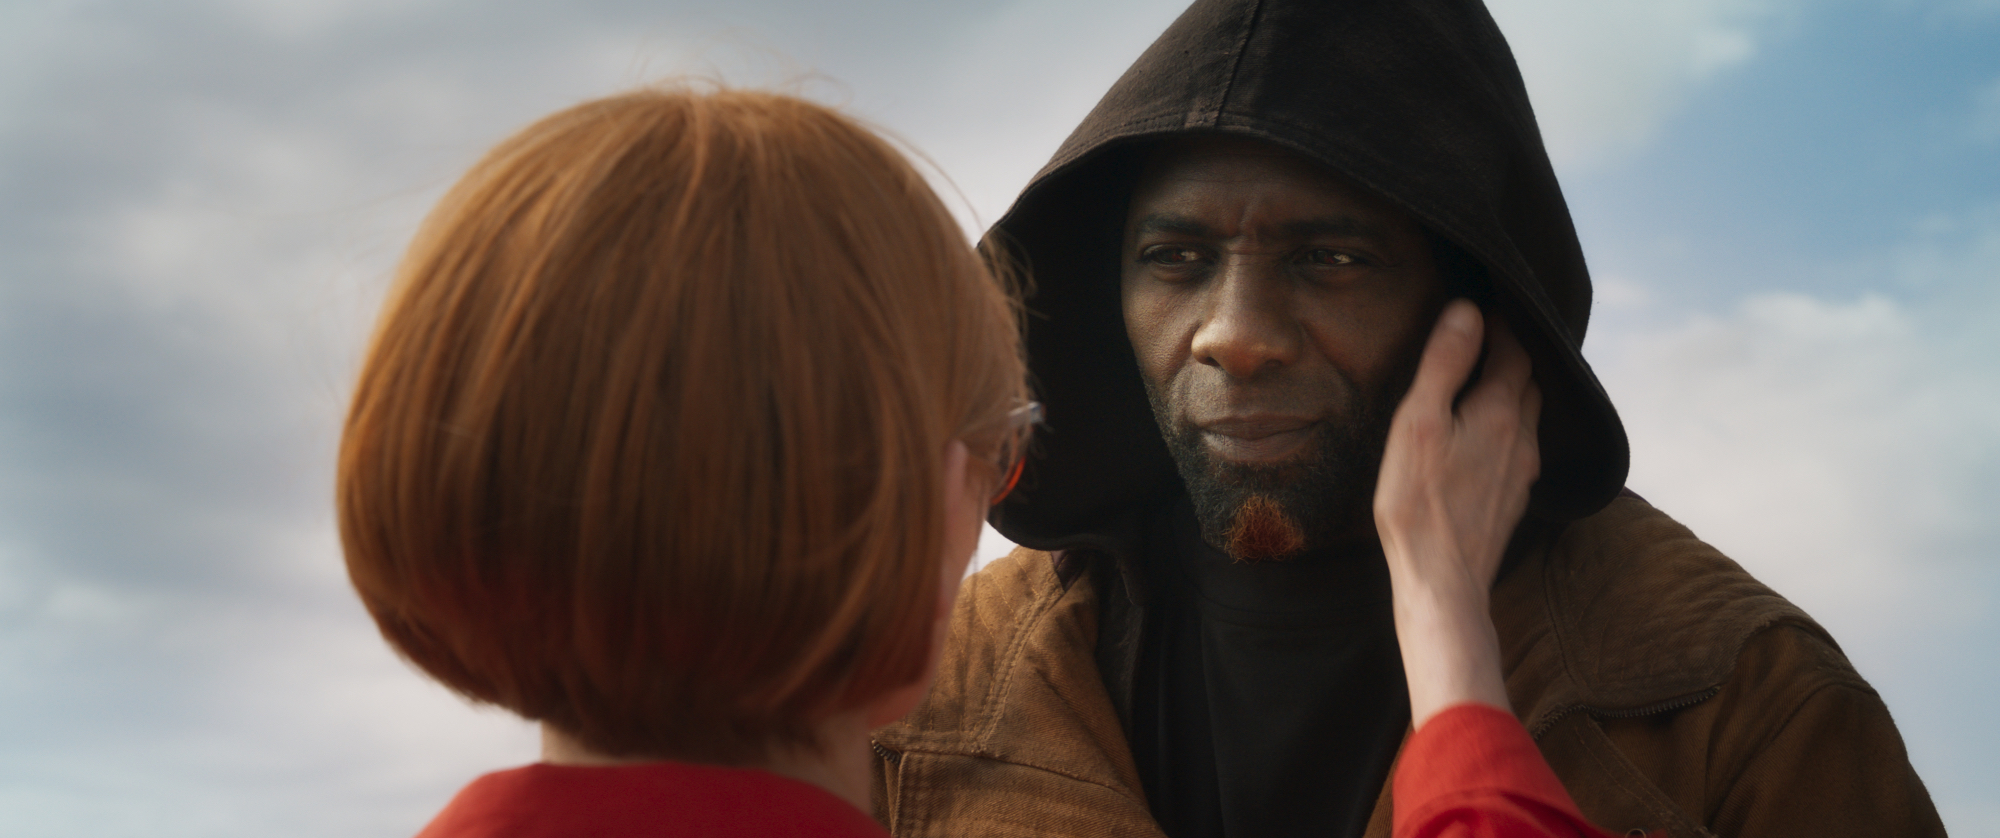 'Three Thousand Years of Longing' Tilda Swinton as Alithea and Idris Elba as The Djinn in a hoodie with Swinton's hand on his cheek